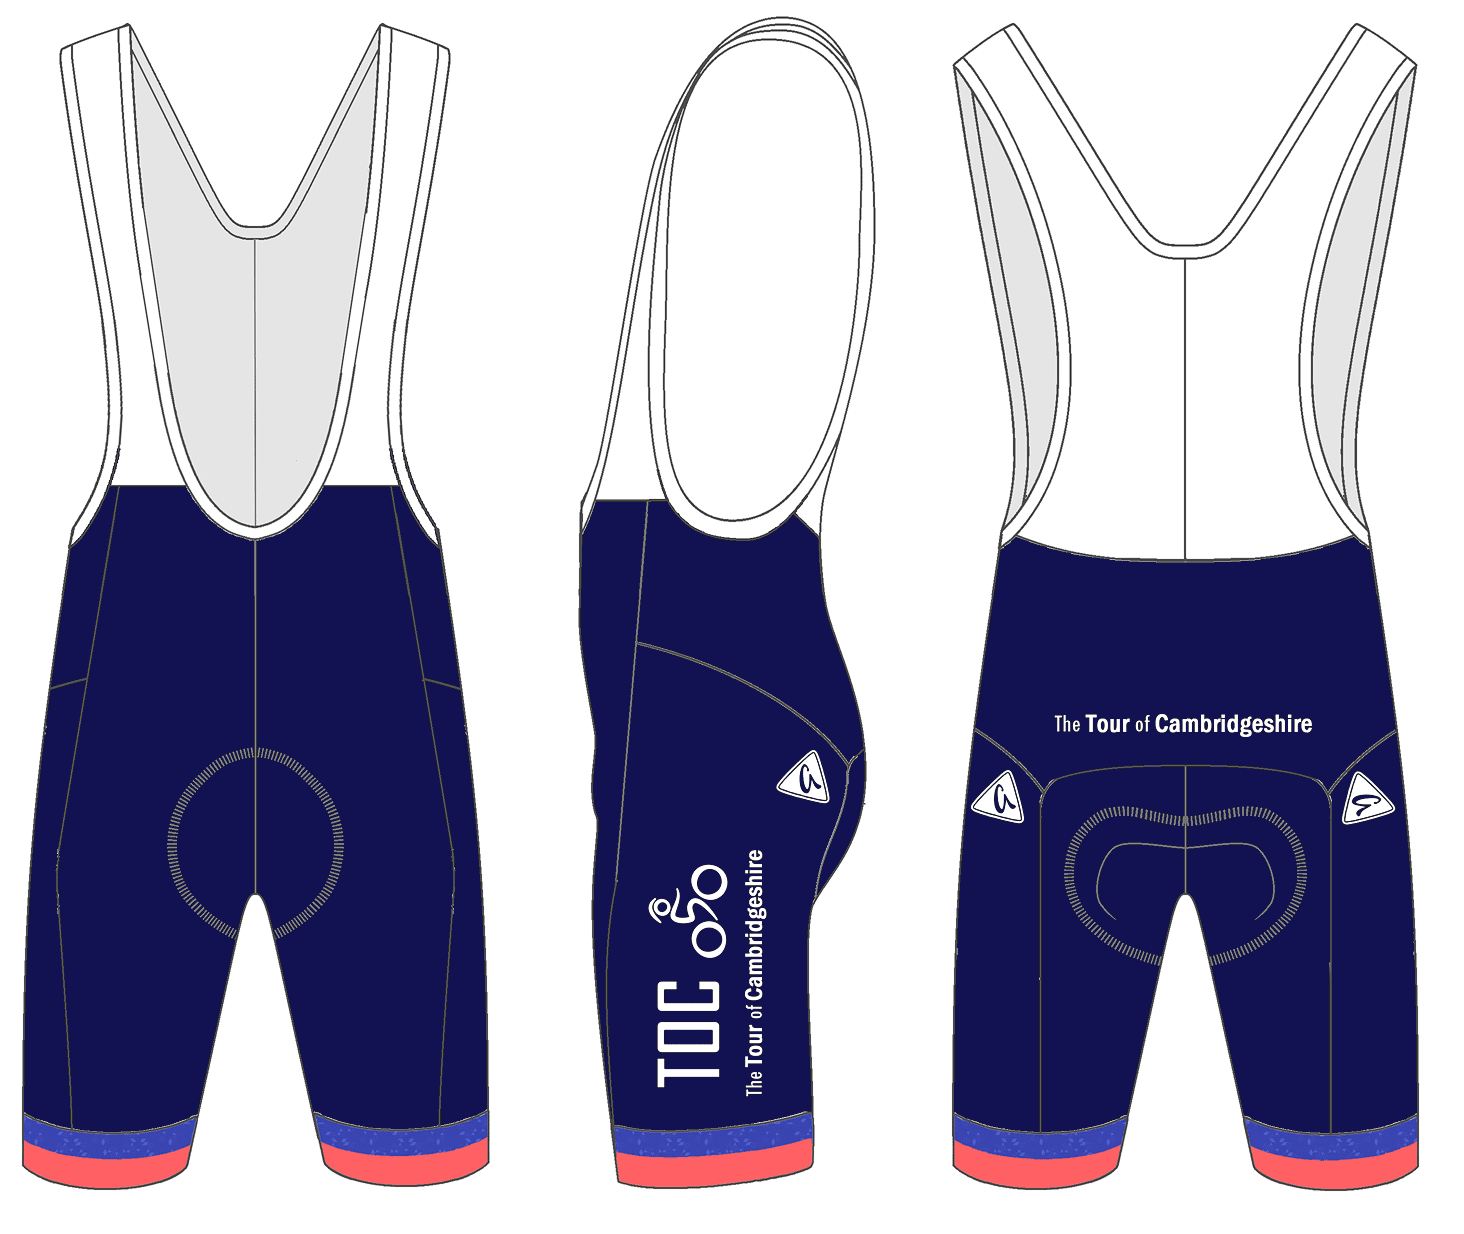 navy blue cycling shorts